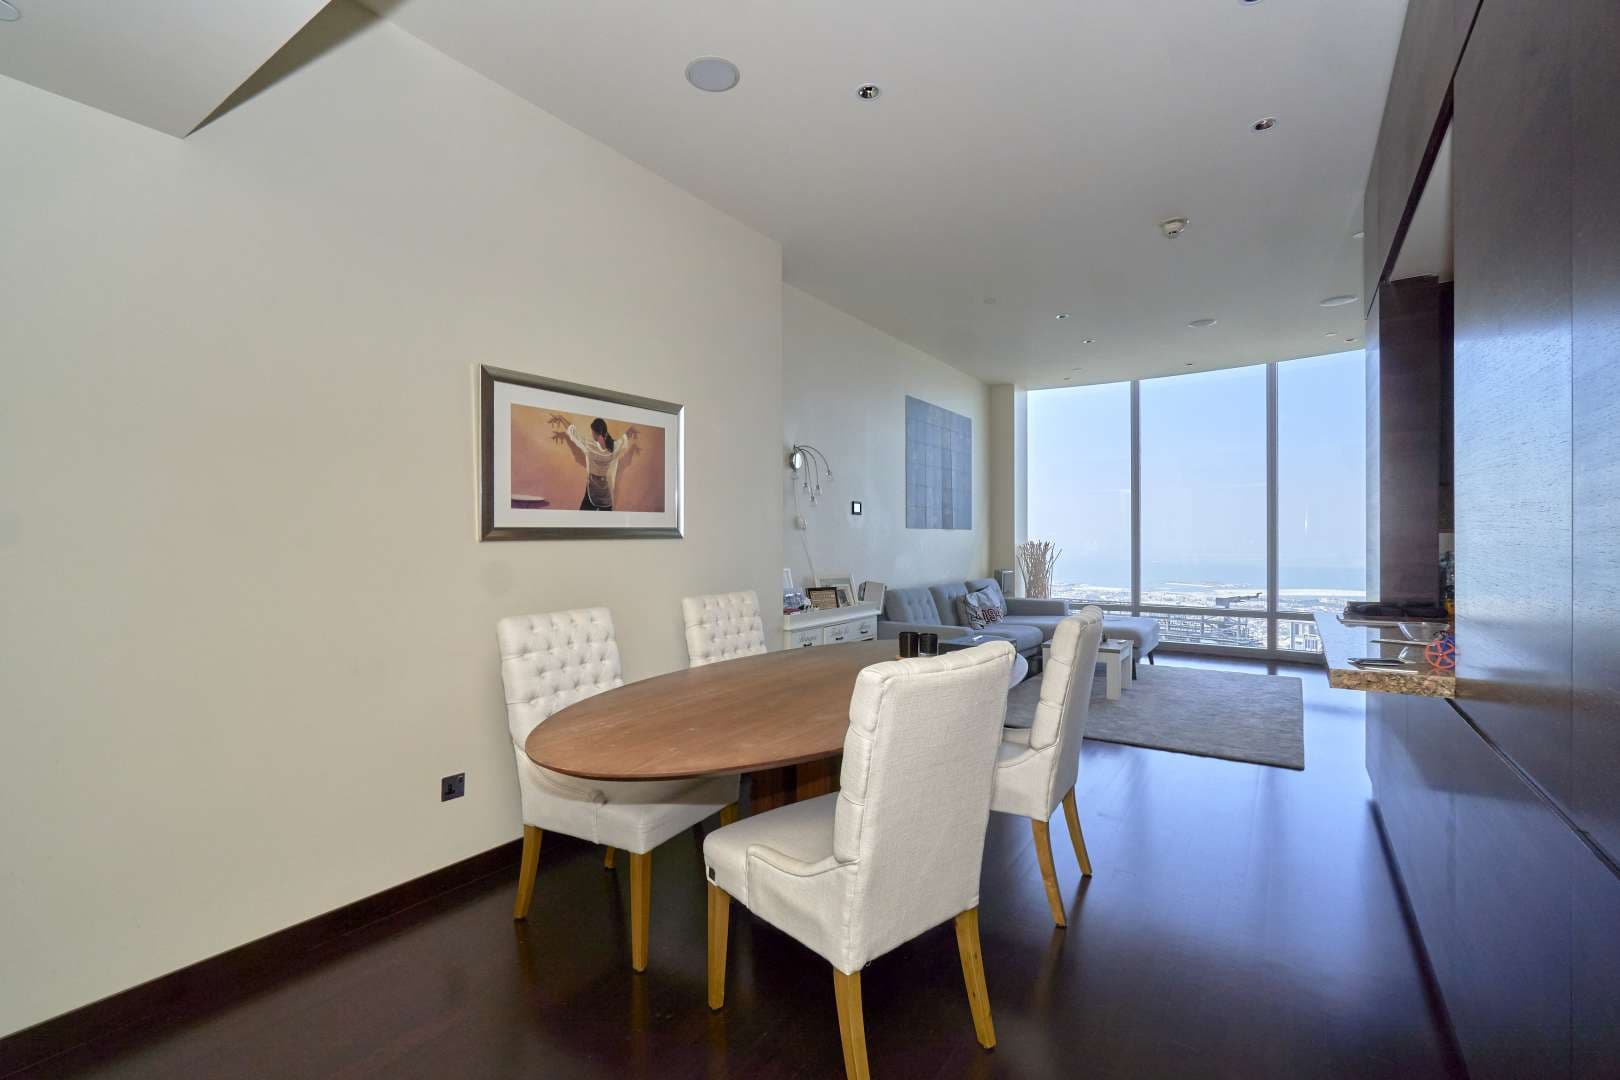 2 Bedroom Apartment For Sale Burj Khalifa Area Lp10155 18306067a09d2700.jpg